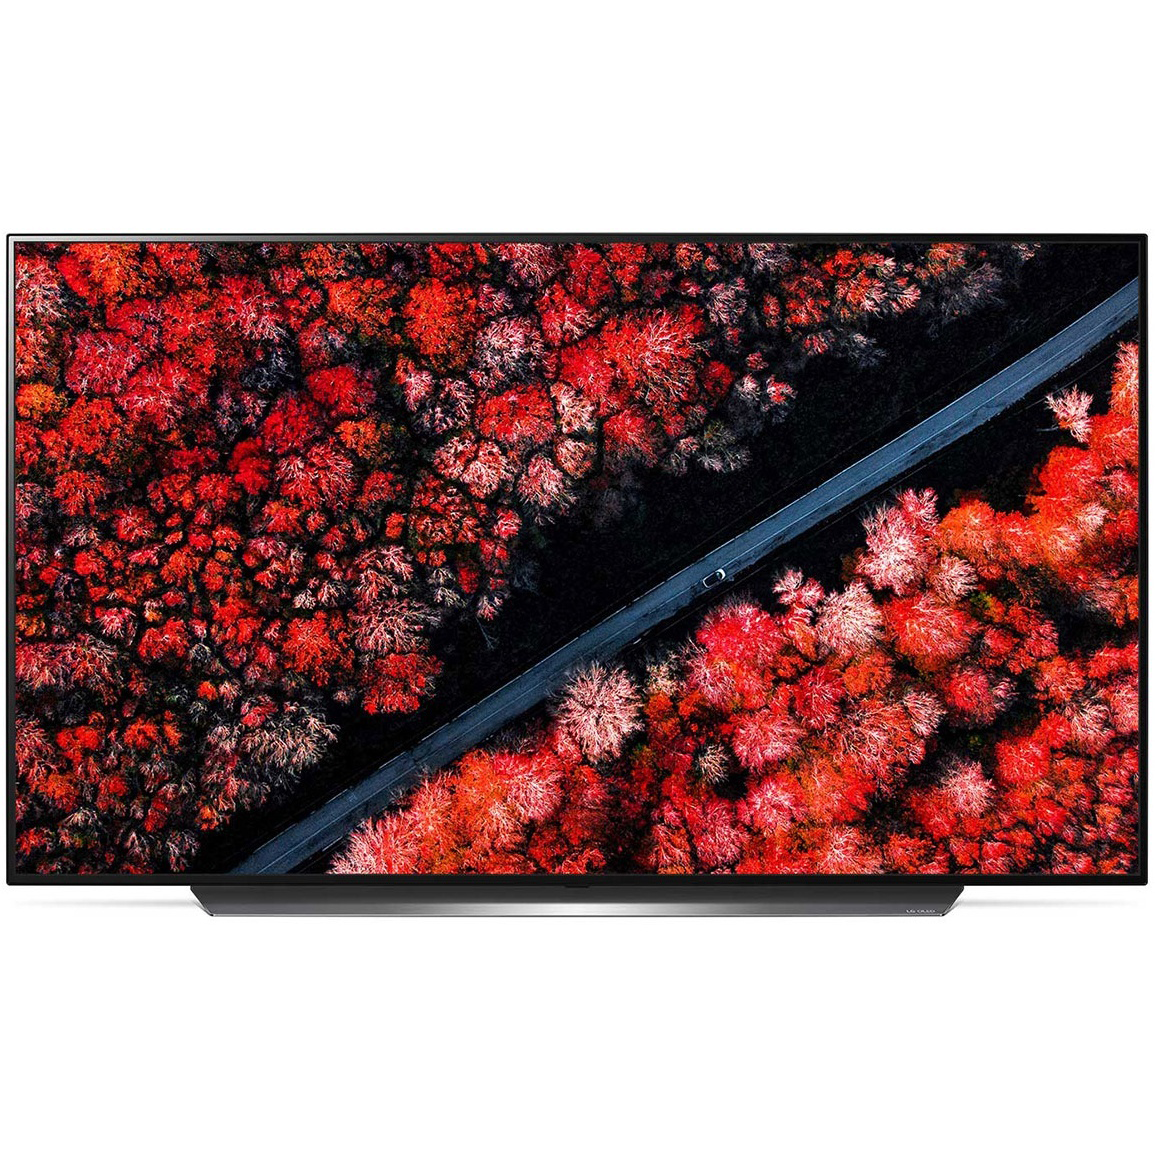 LG Smart Tivi OLED C9 4K 55 inch 55C9PTA OLED55C9PTA chính hãng